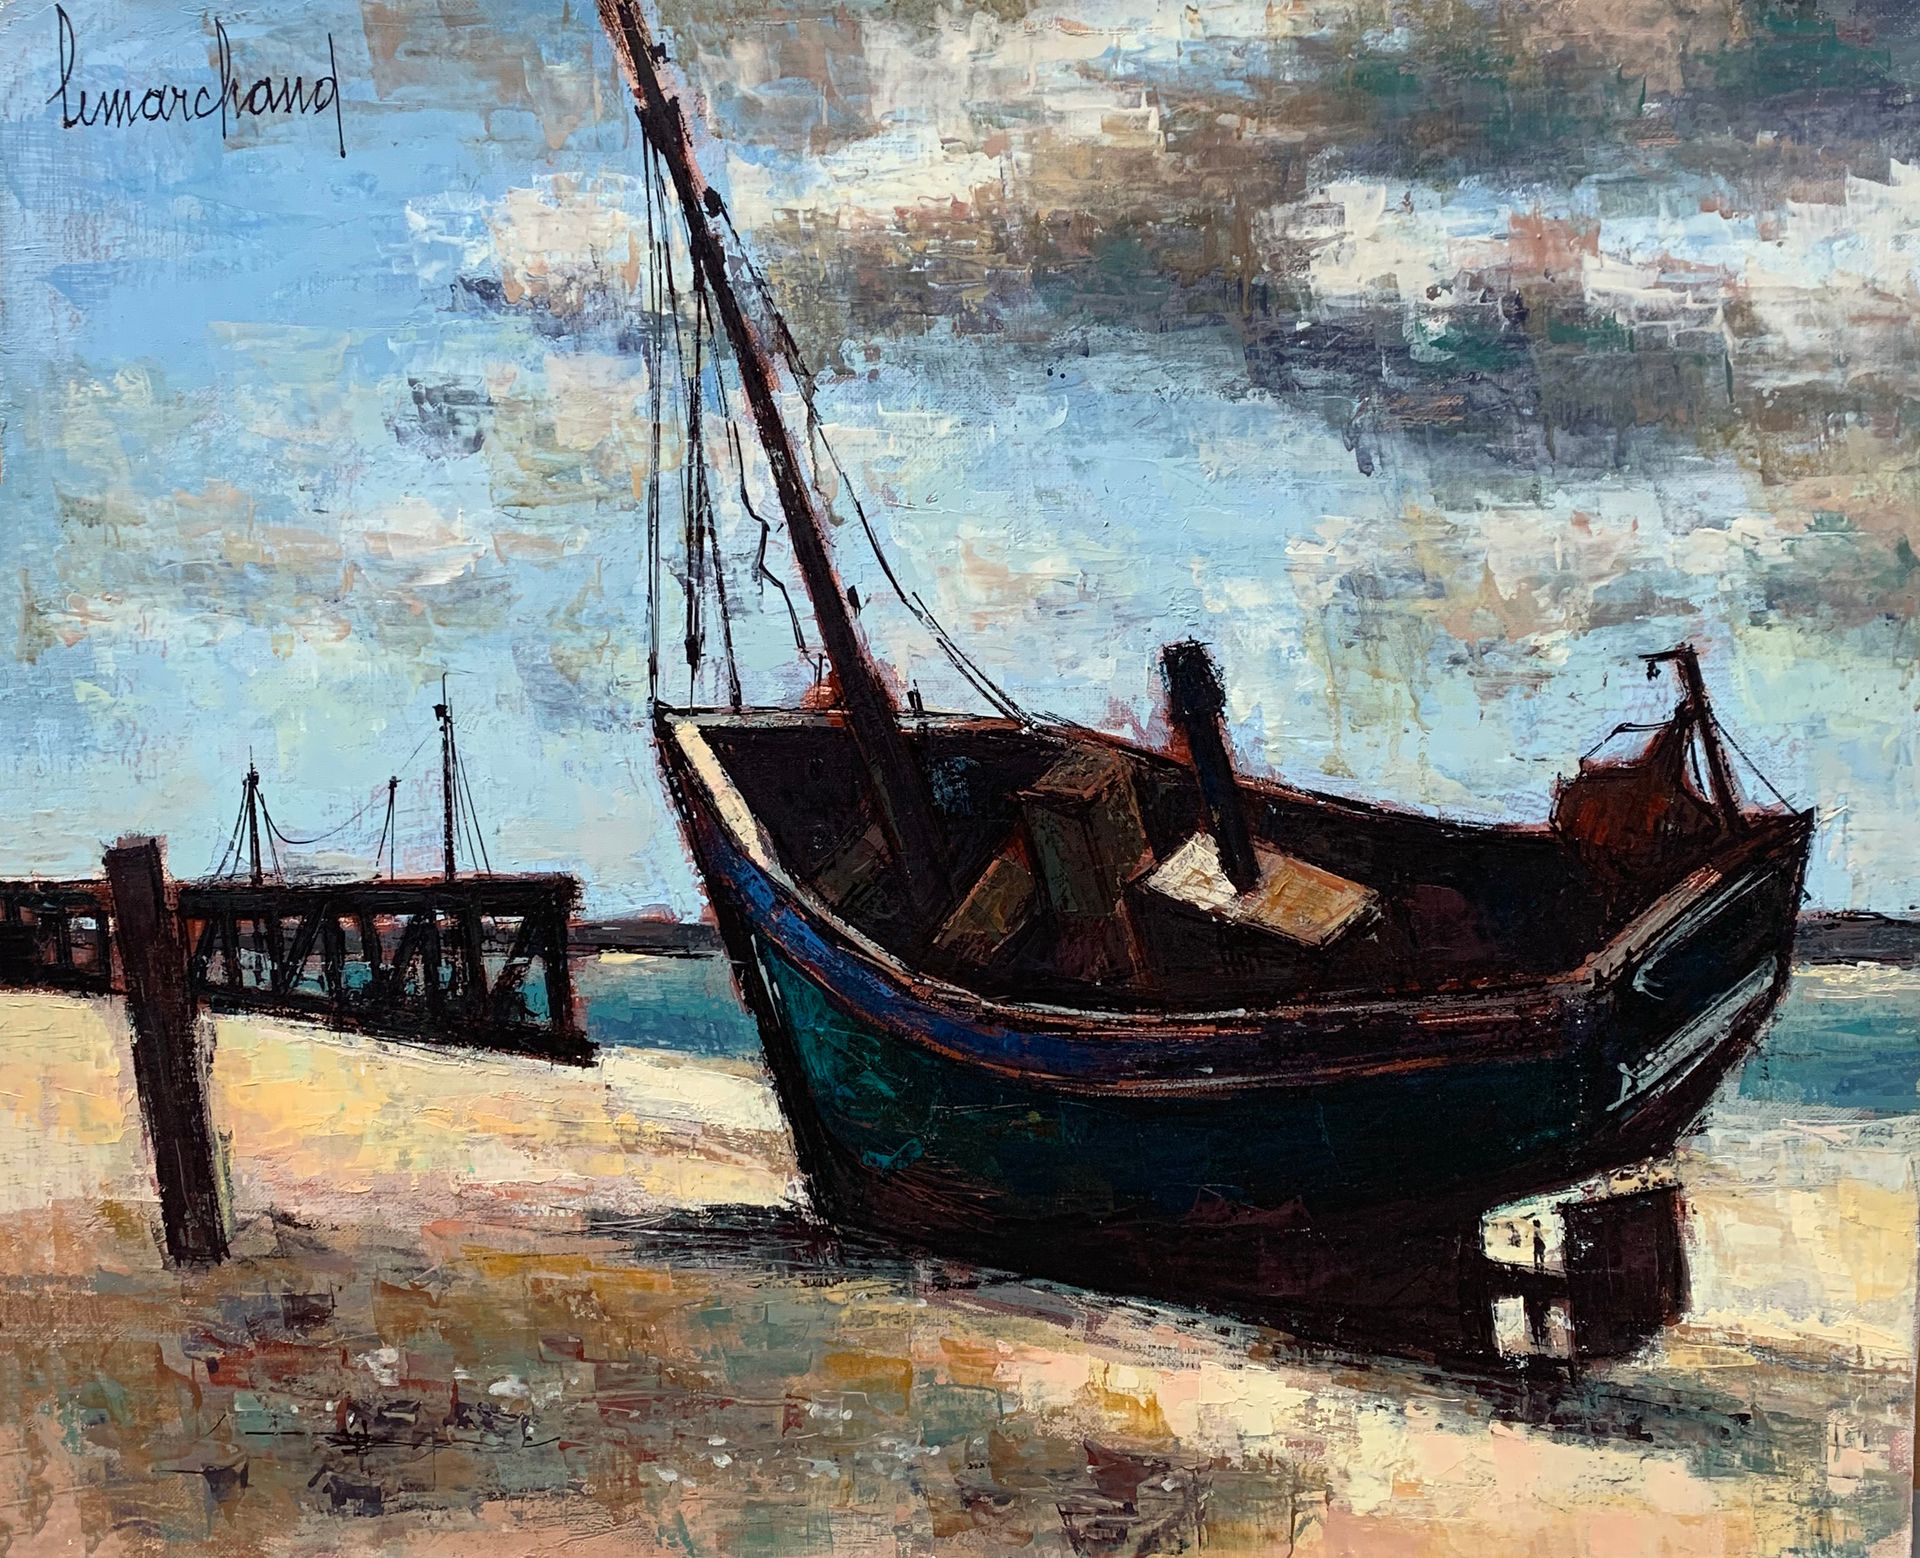 Null 皮埃尔-莱马赫德 (1906-1970)

搁浅的船

布面油画，左上角有签名

46 x 55厘米。